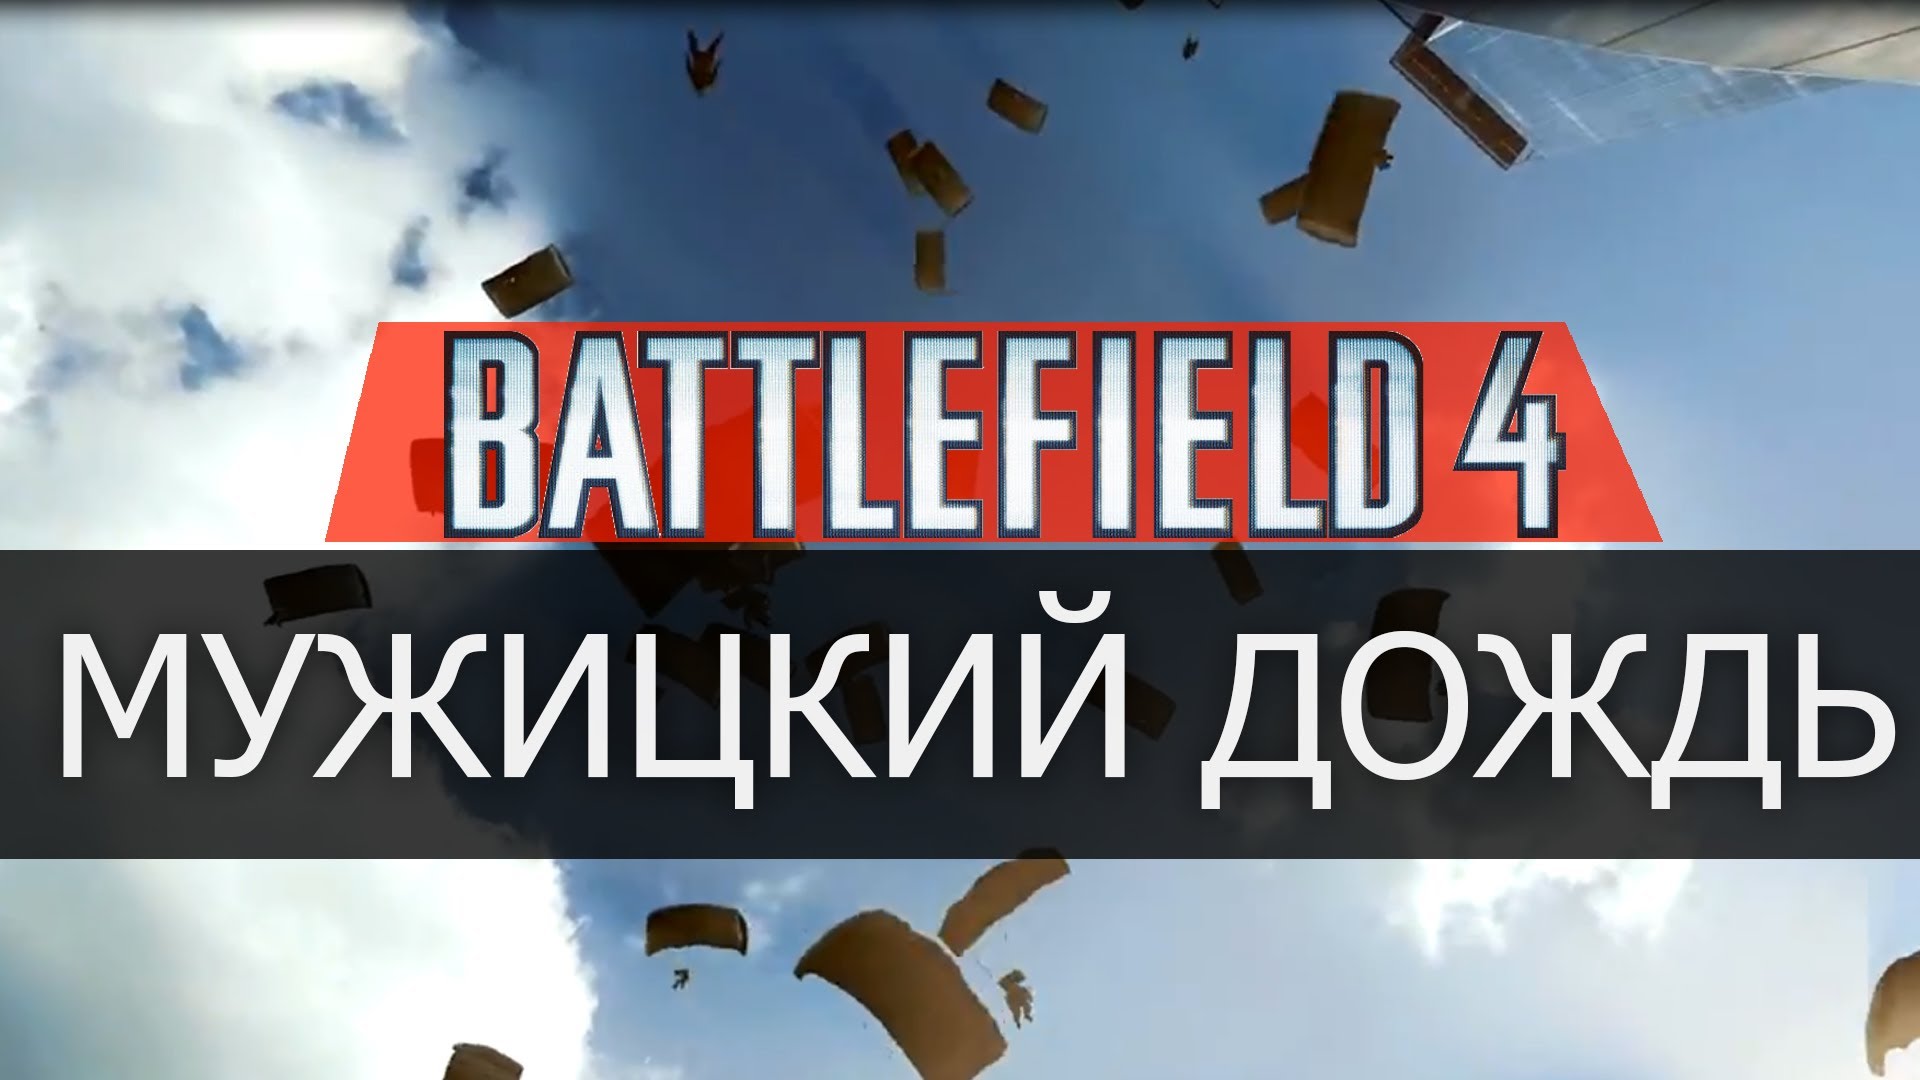 Battlefield 4 - Мужицкий дождь (видео на 23 Февраля)